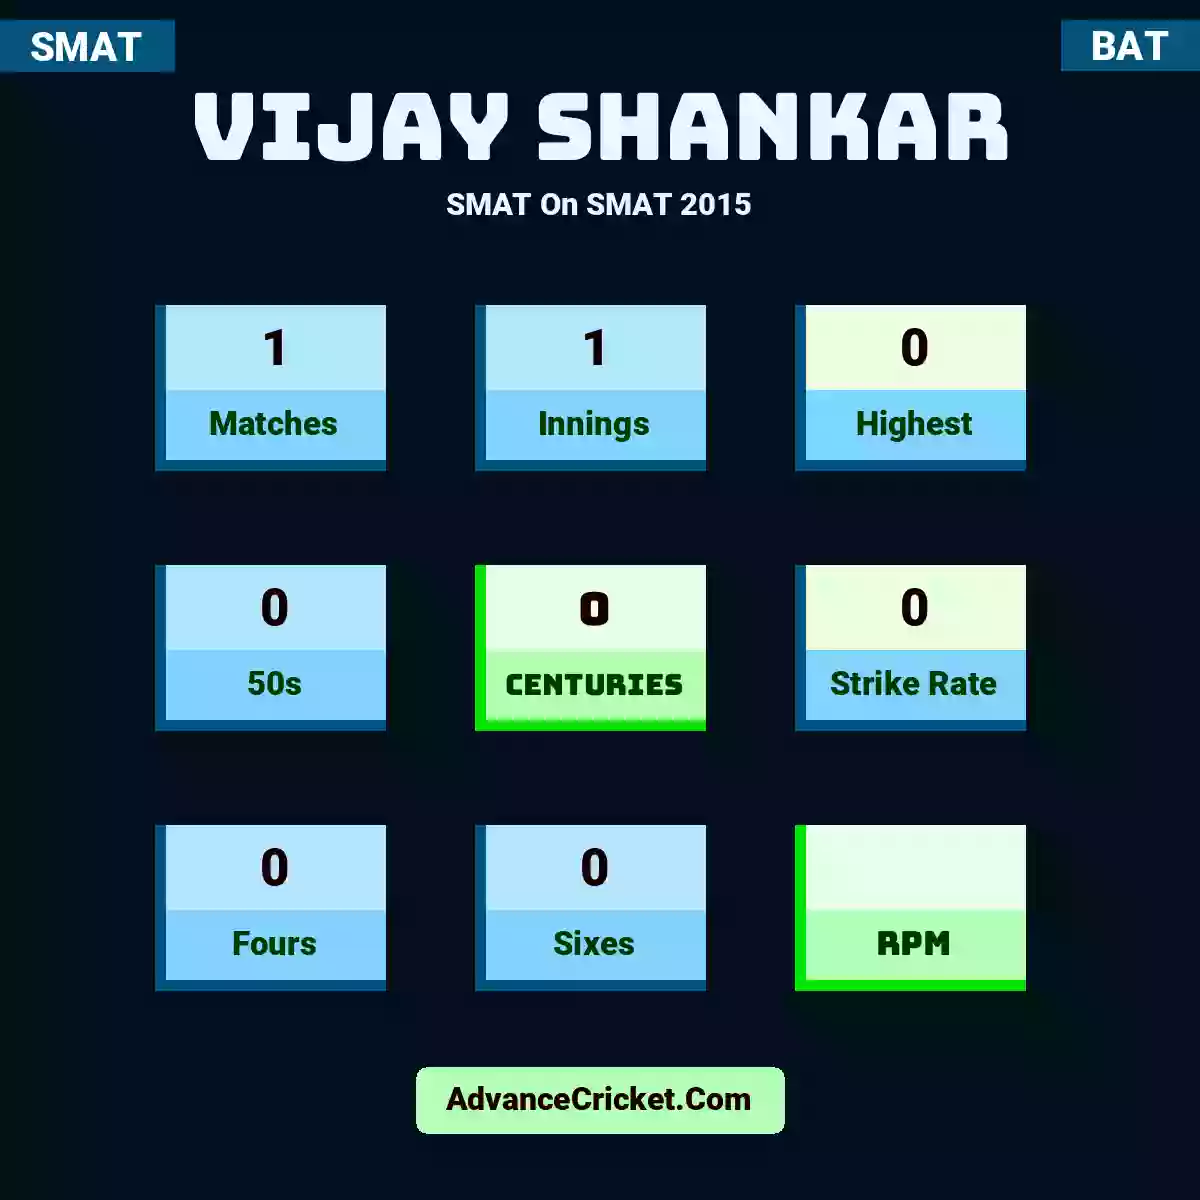 Vijay Shankar SMAT  On SMAT 2015, Vijay Shankar played 1 matches, scored 0 runs as highest, 0 half-centuries, and 0 centuries, with a strike rate of 0. V.Shankar hit 0 fours and 0 sixes.